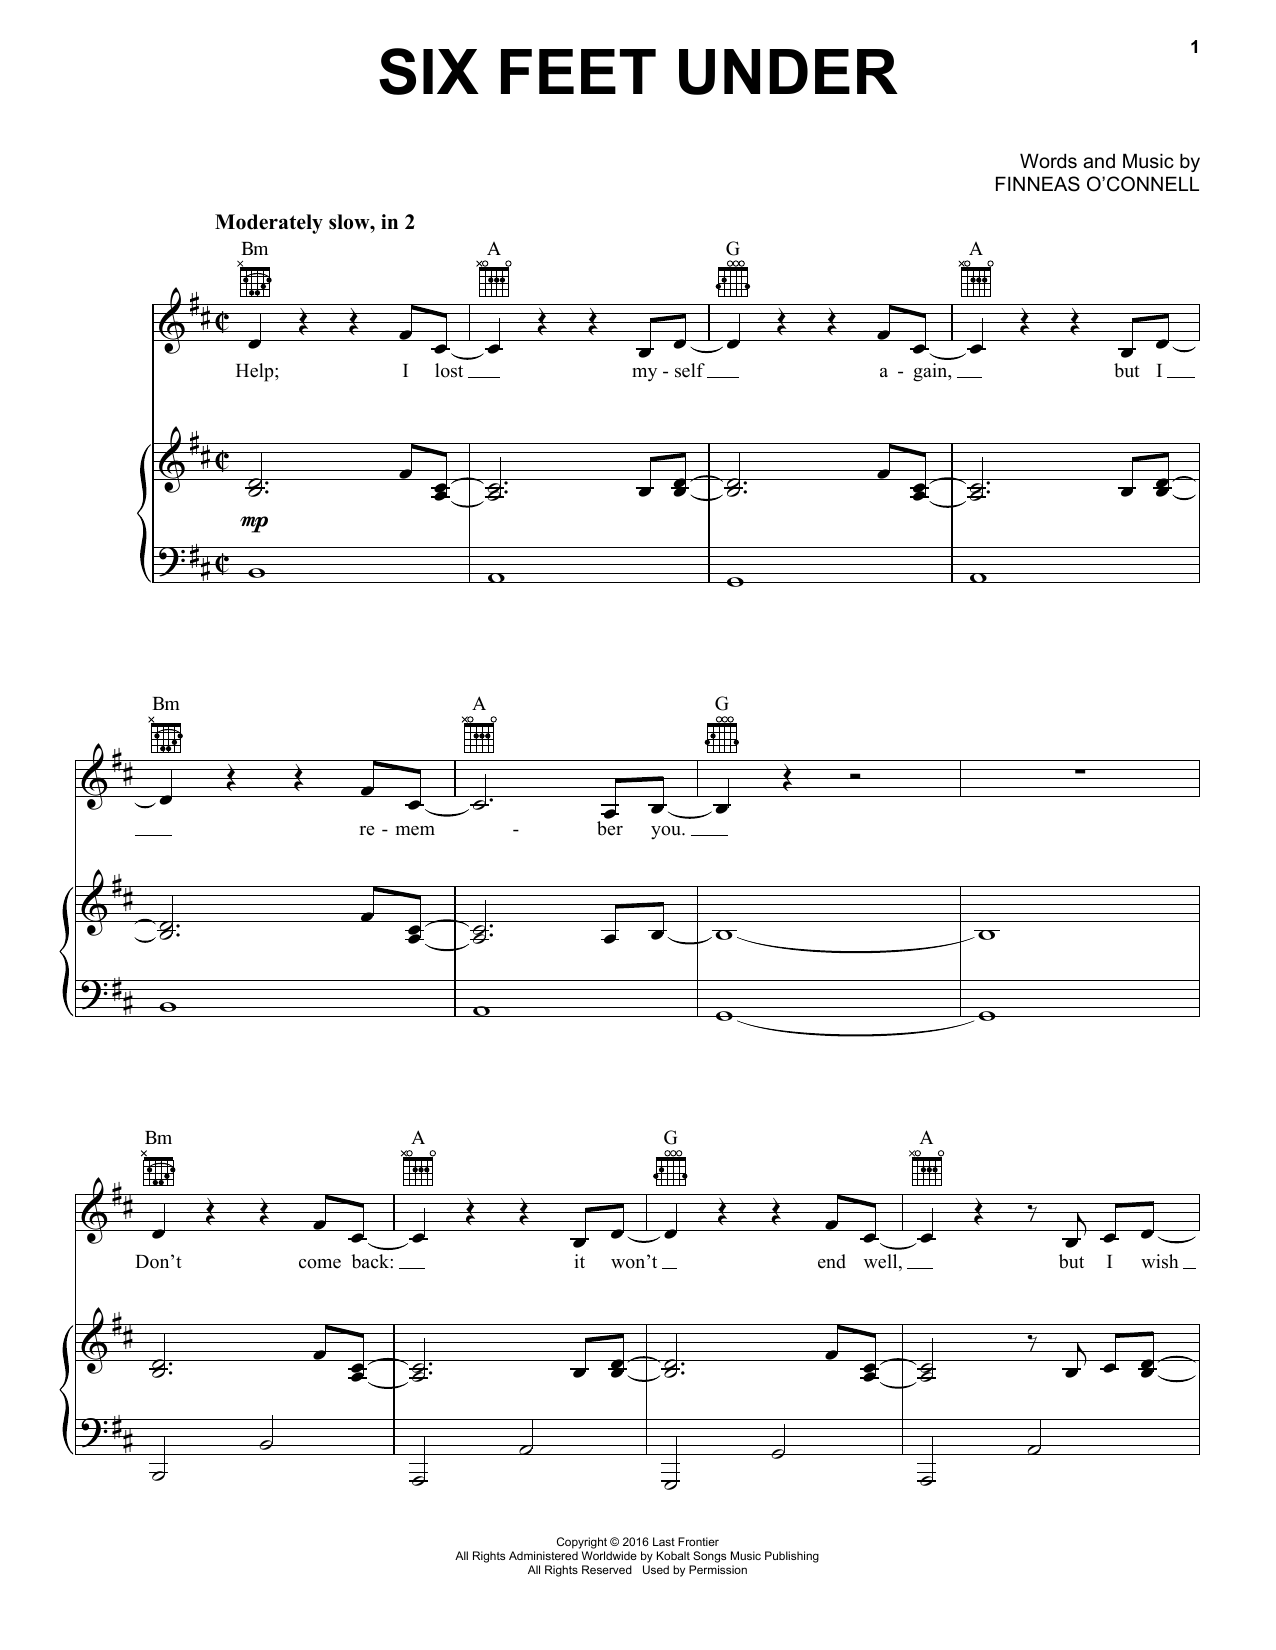 Billie Eilish Six Feet Under Sheet Music Notes & Chords for Guitar Chords/Lyrics - Download or Print PDF